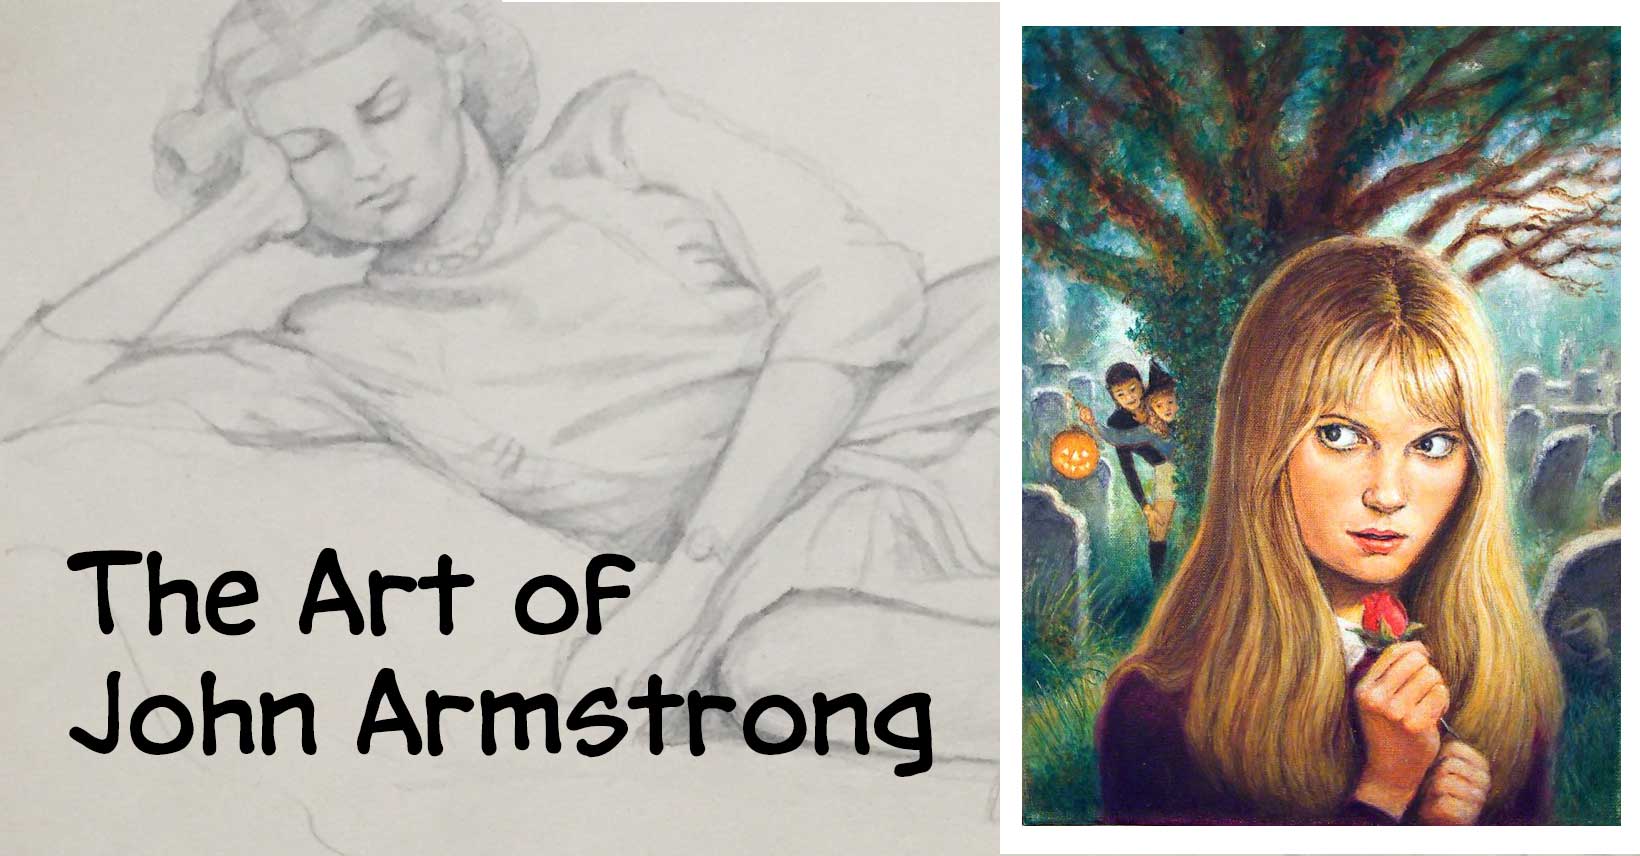 The Art of John Armstrong